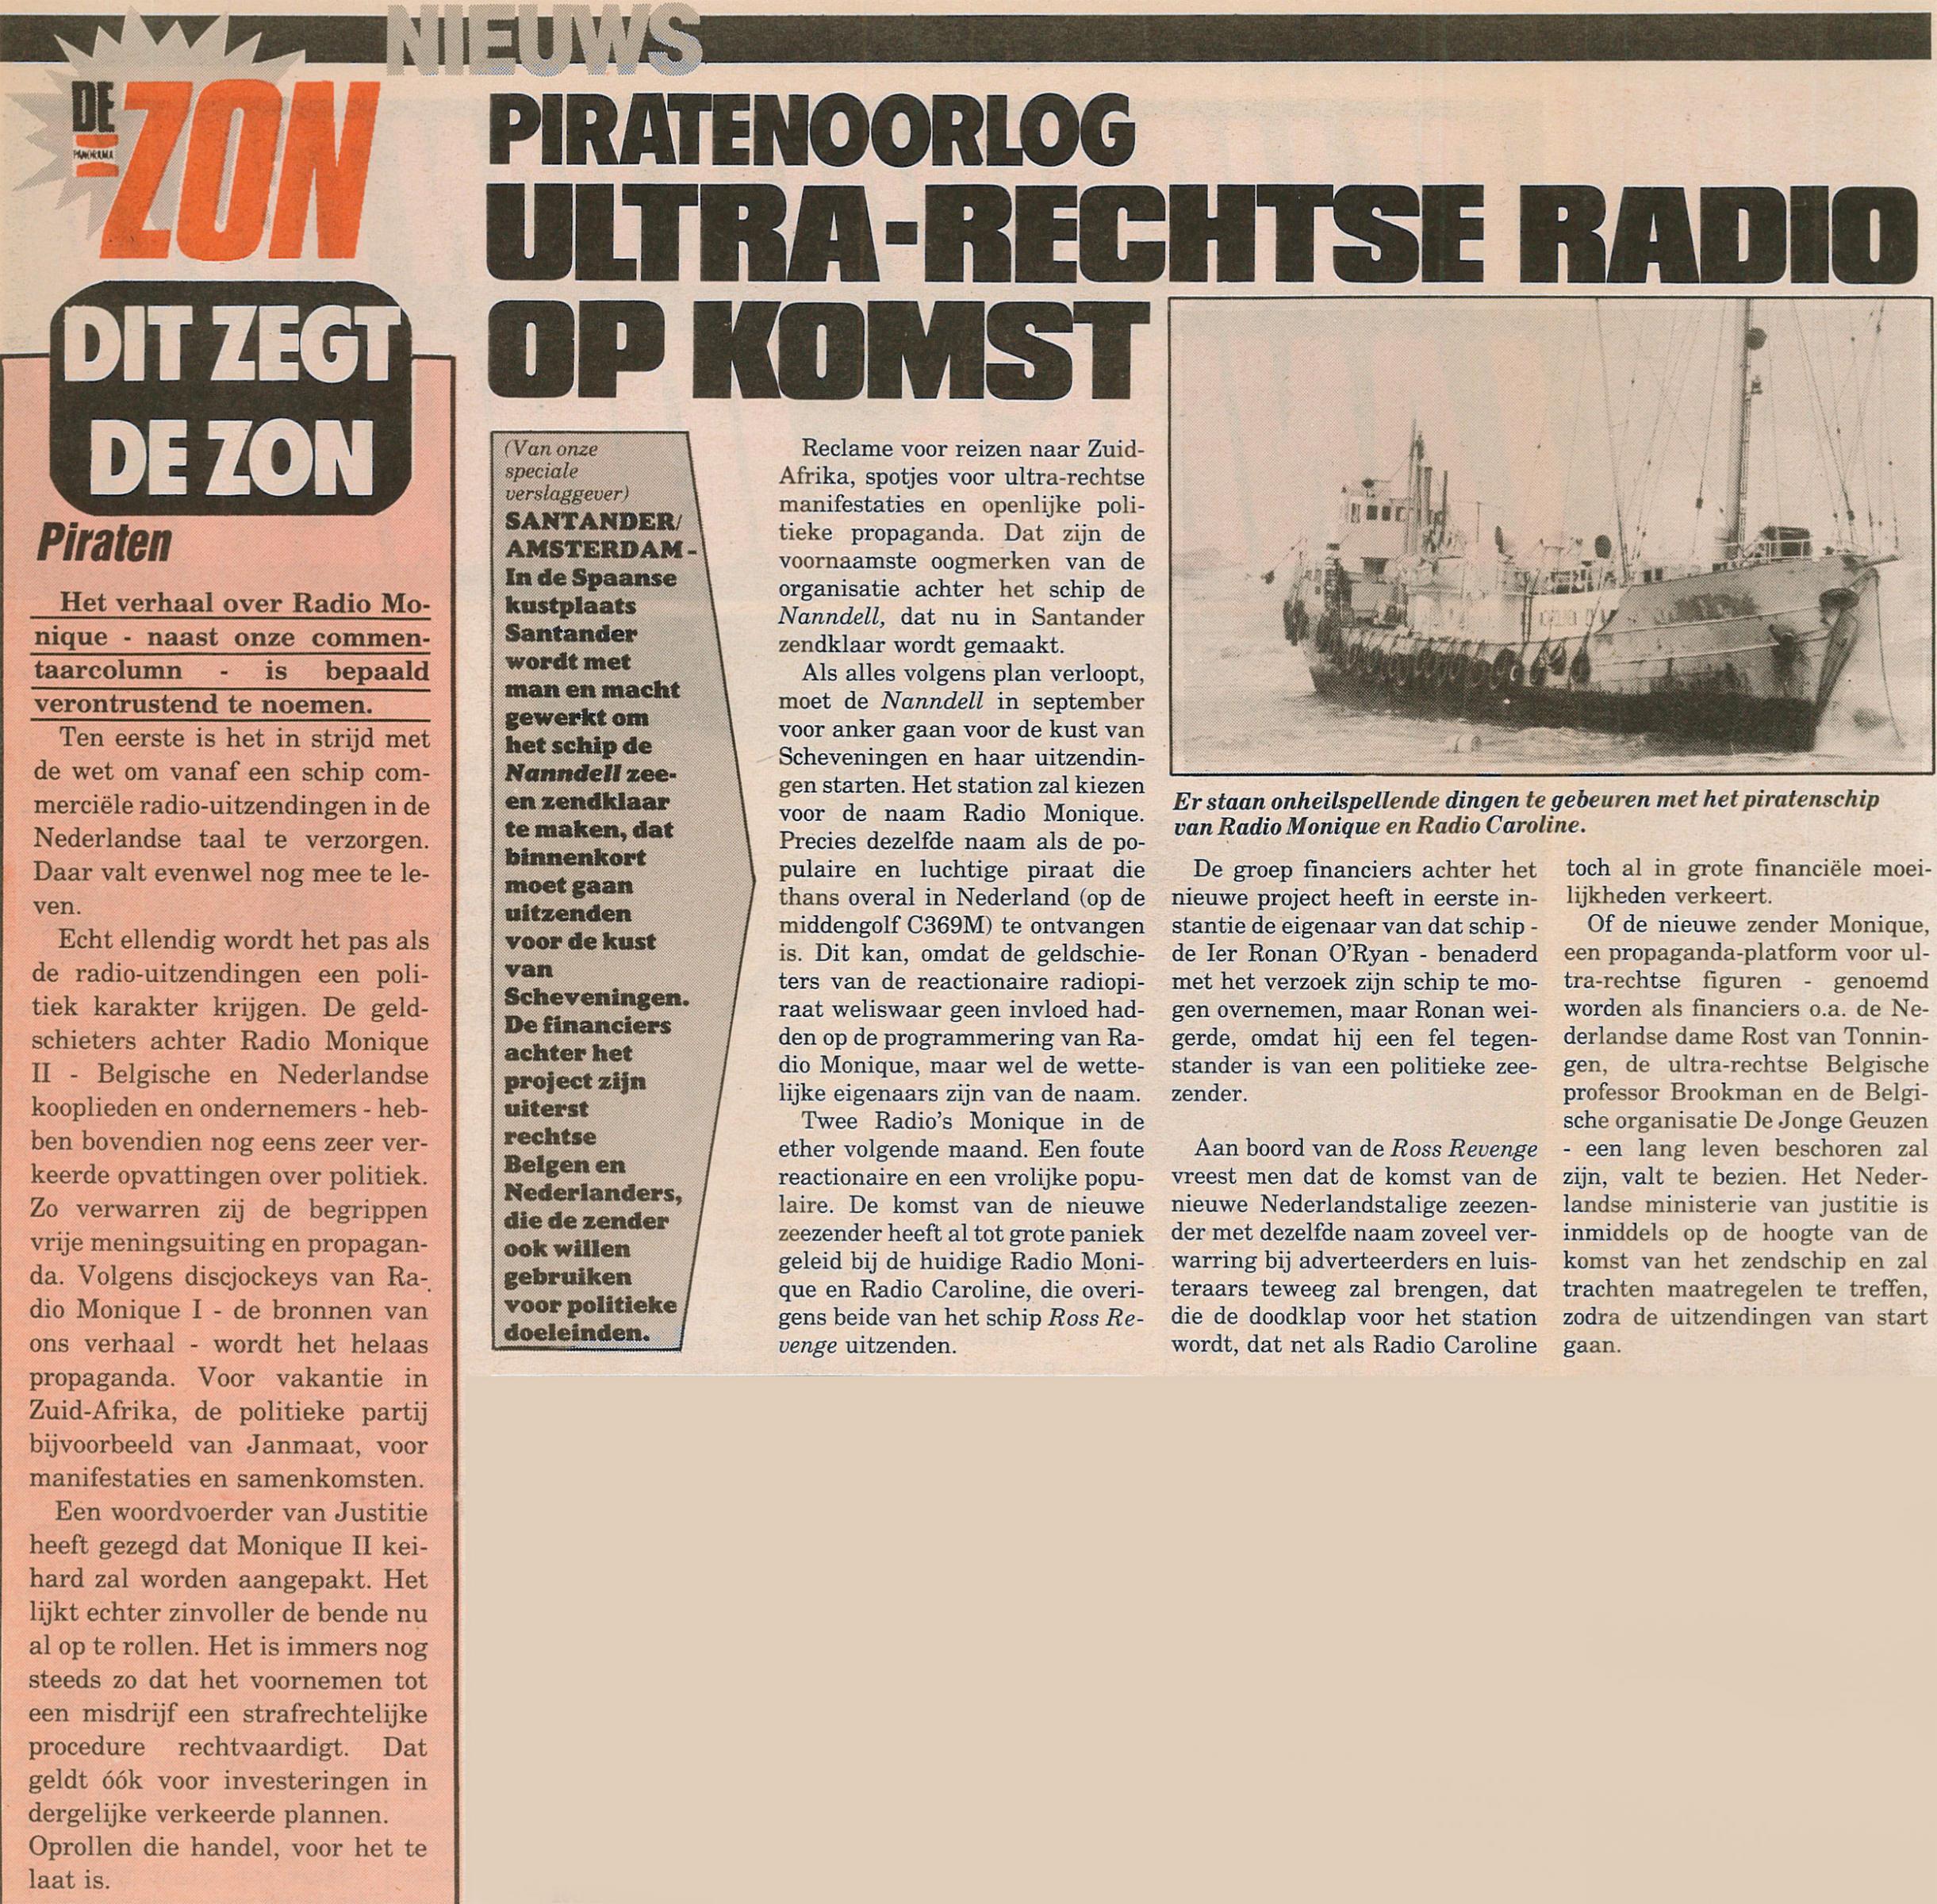 19860814 De zon_Panorama Ultra rechtse radio op komst